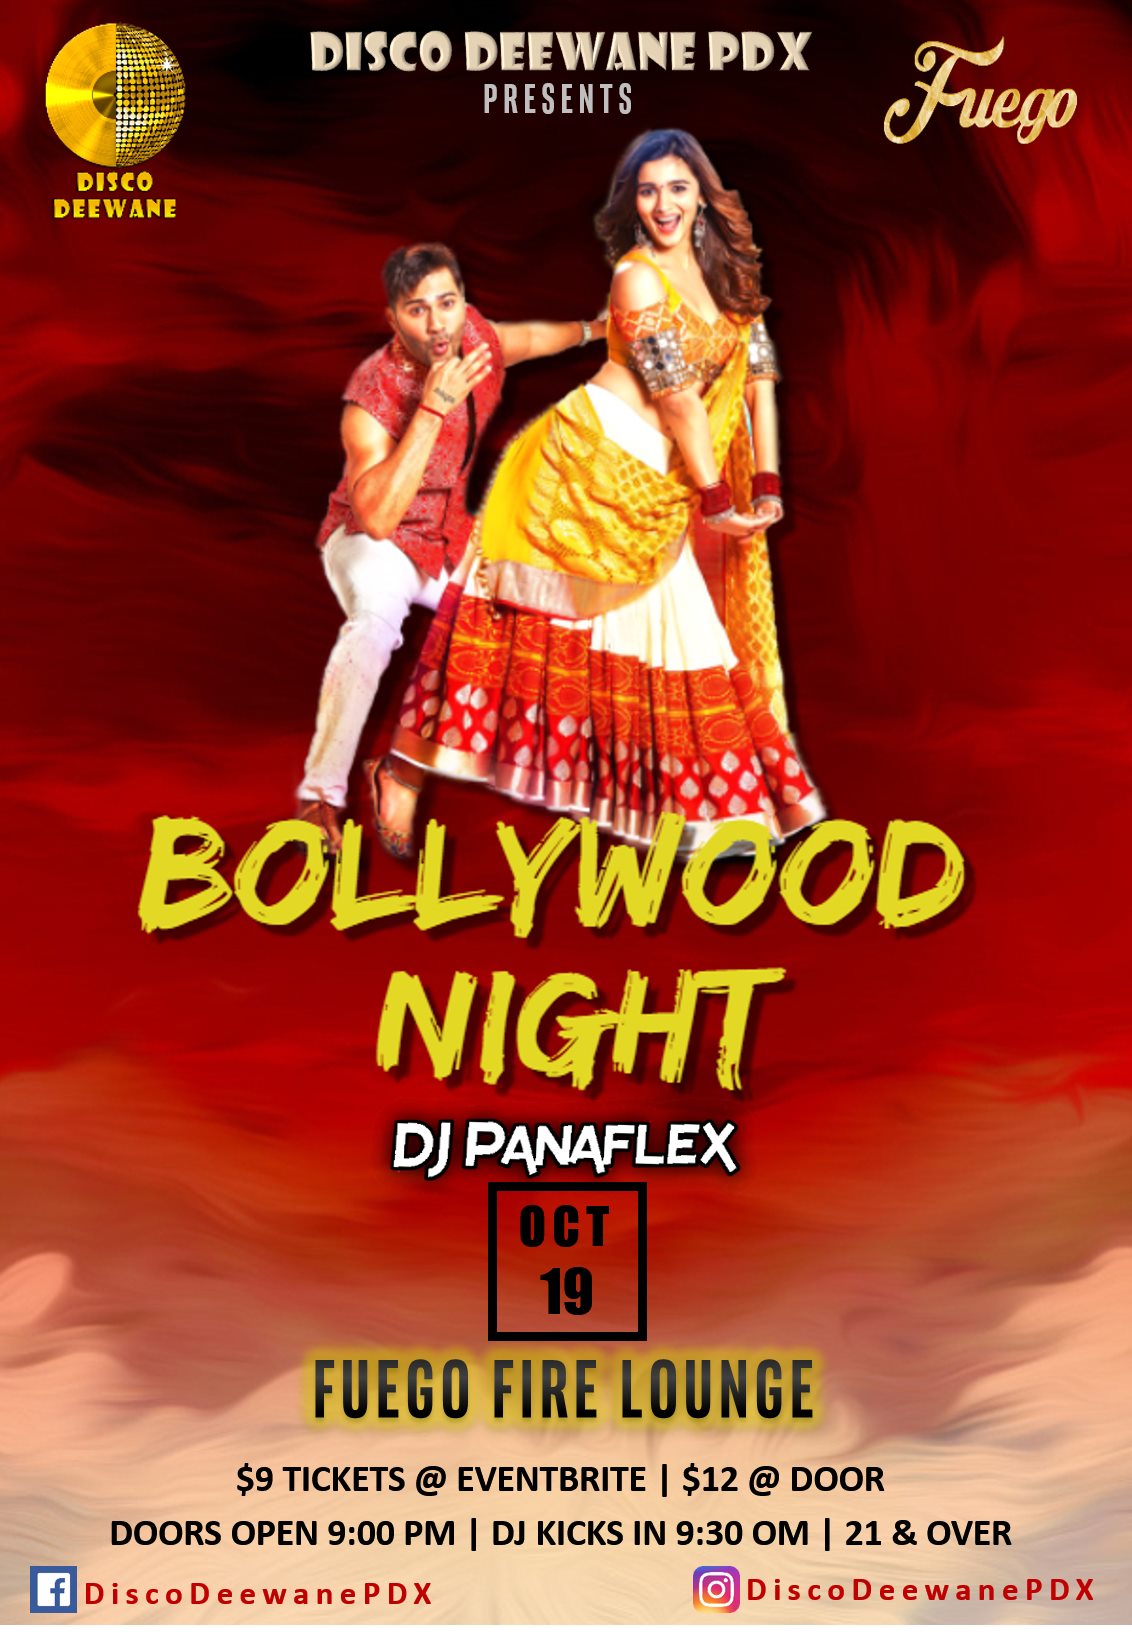 Bollywood Night with Disco Deewane PDX